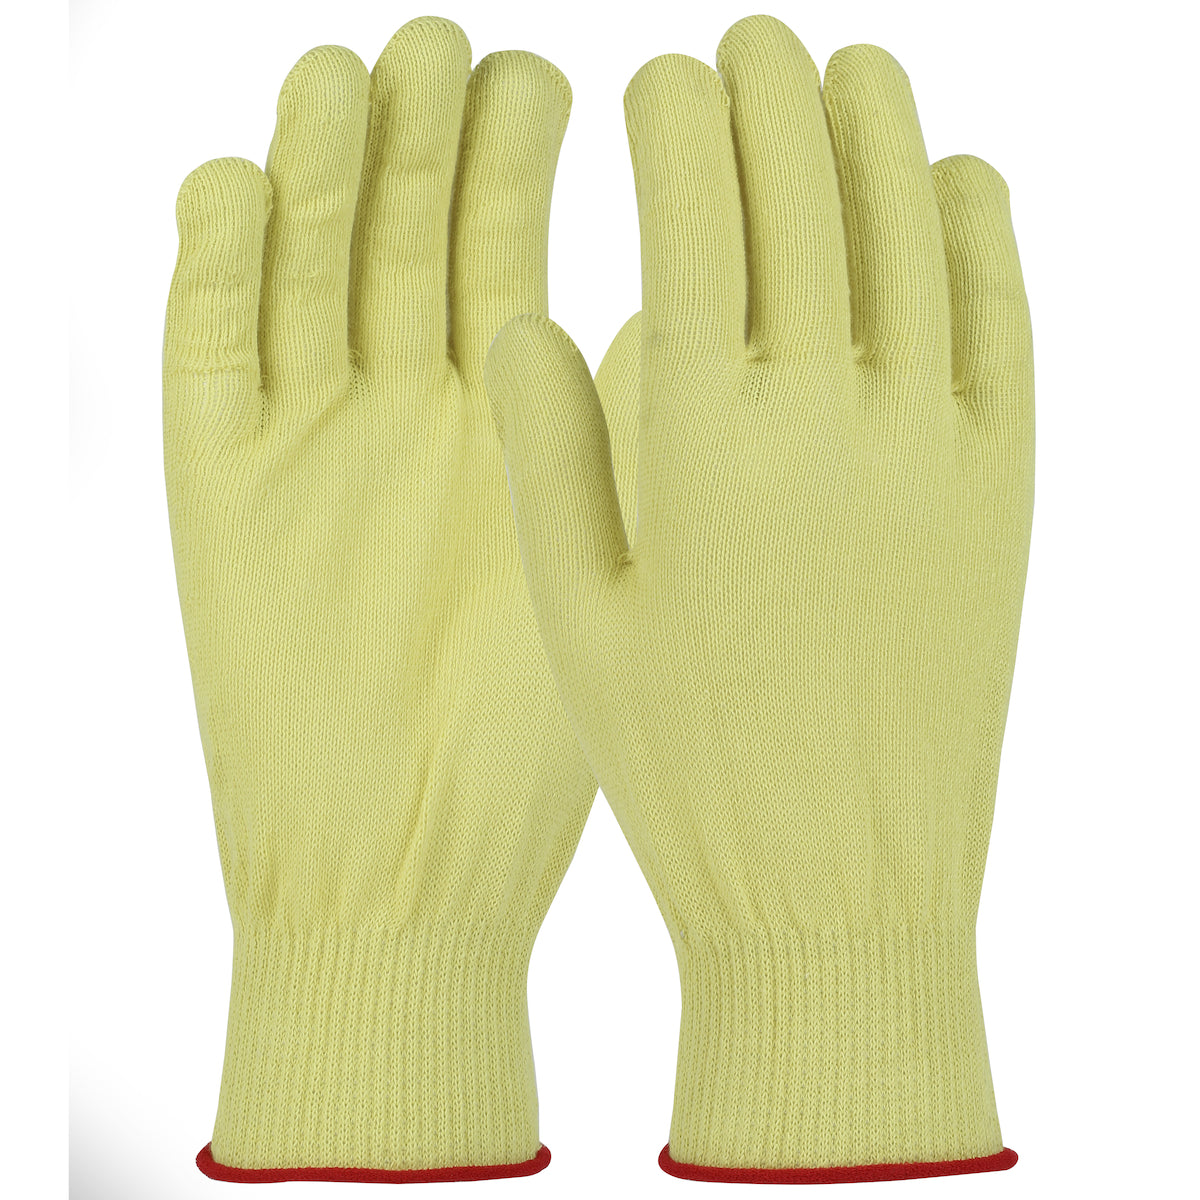 WPP MTW13-S Seamless Knit Aramid Glove - Light Weight